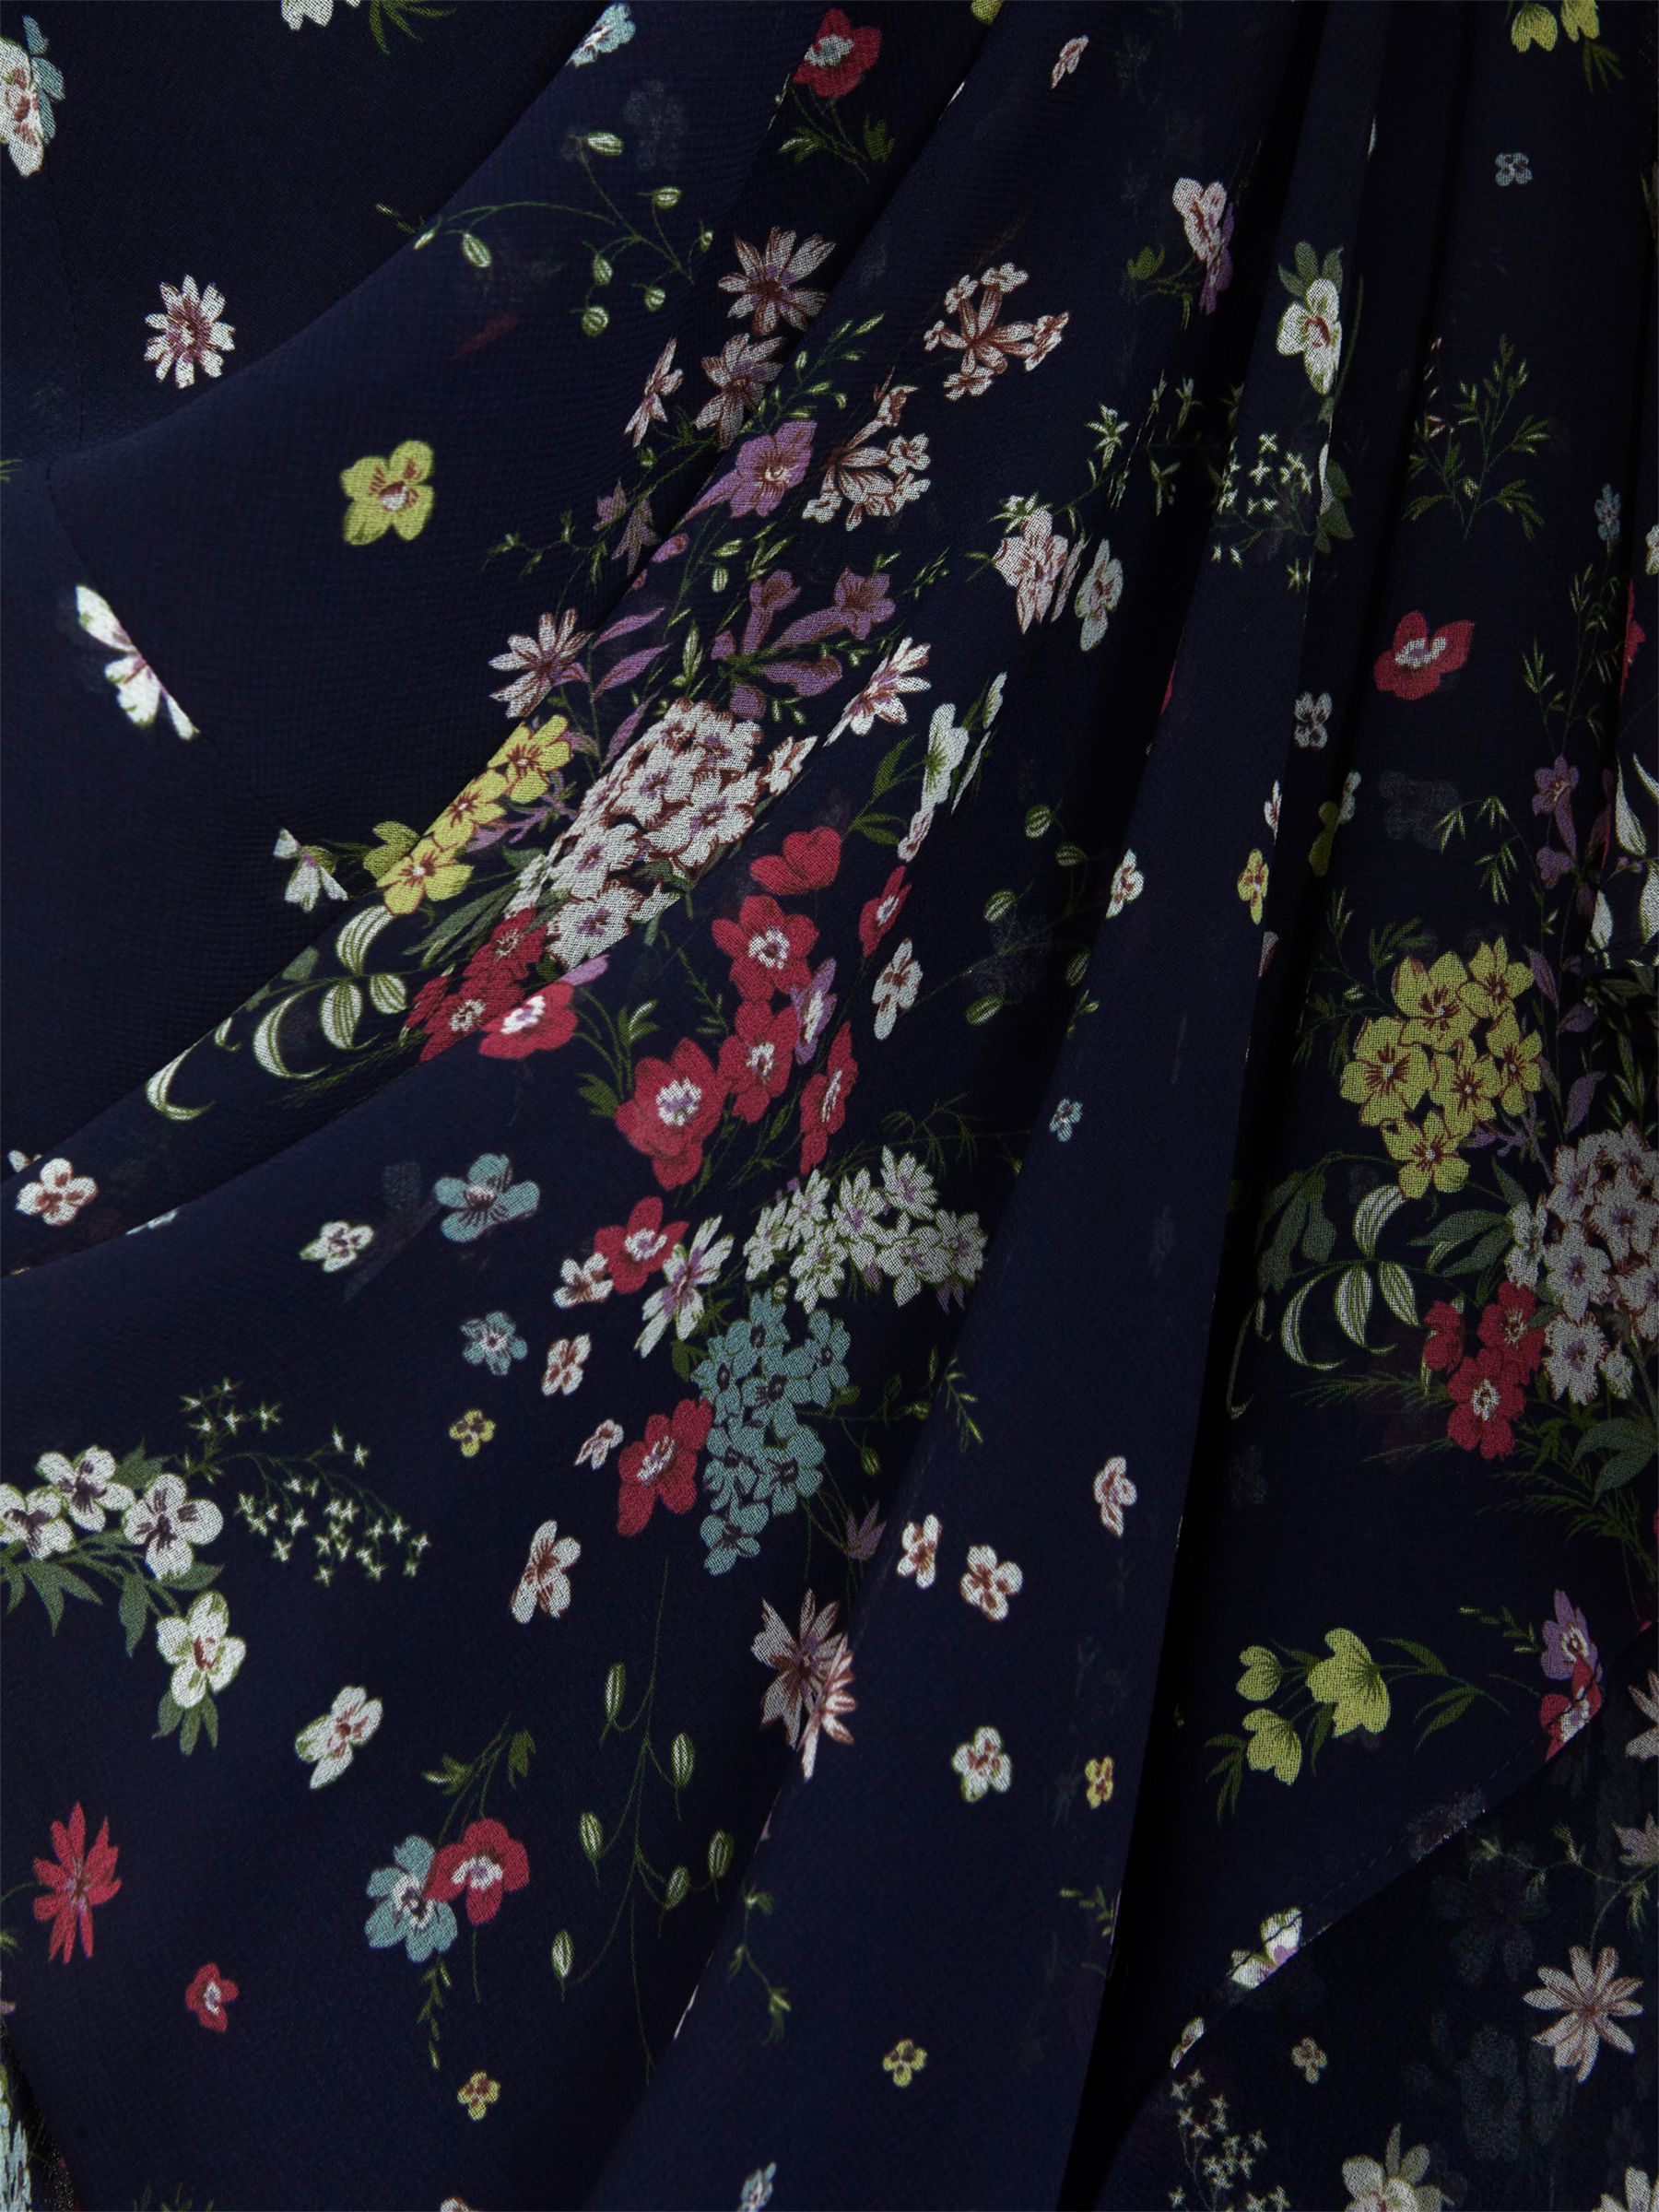 Buy Hobbs Carly Floral Midi Dress, Navy/Multi Online at johnlewis.com